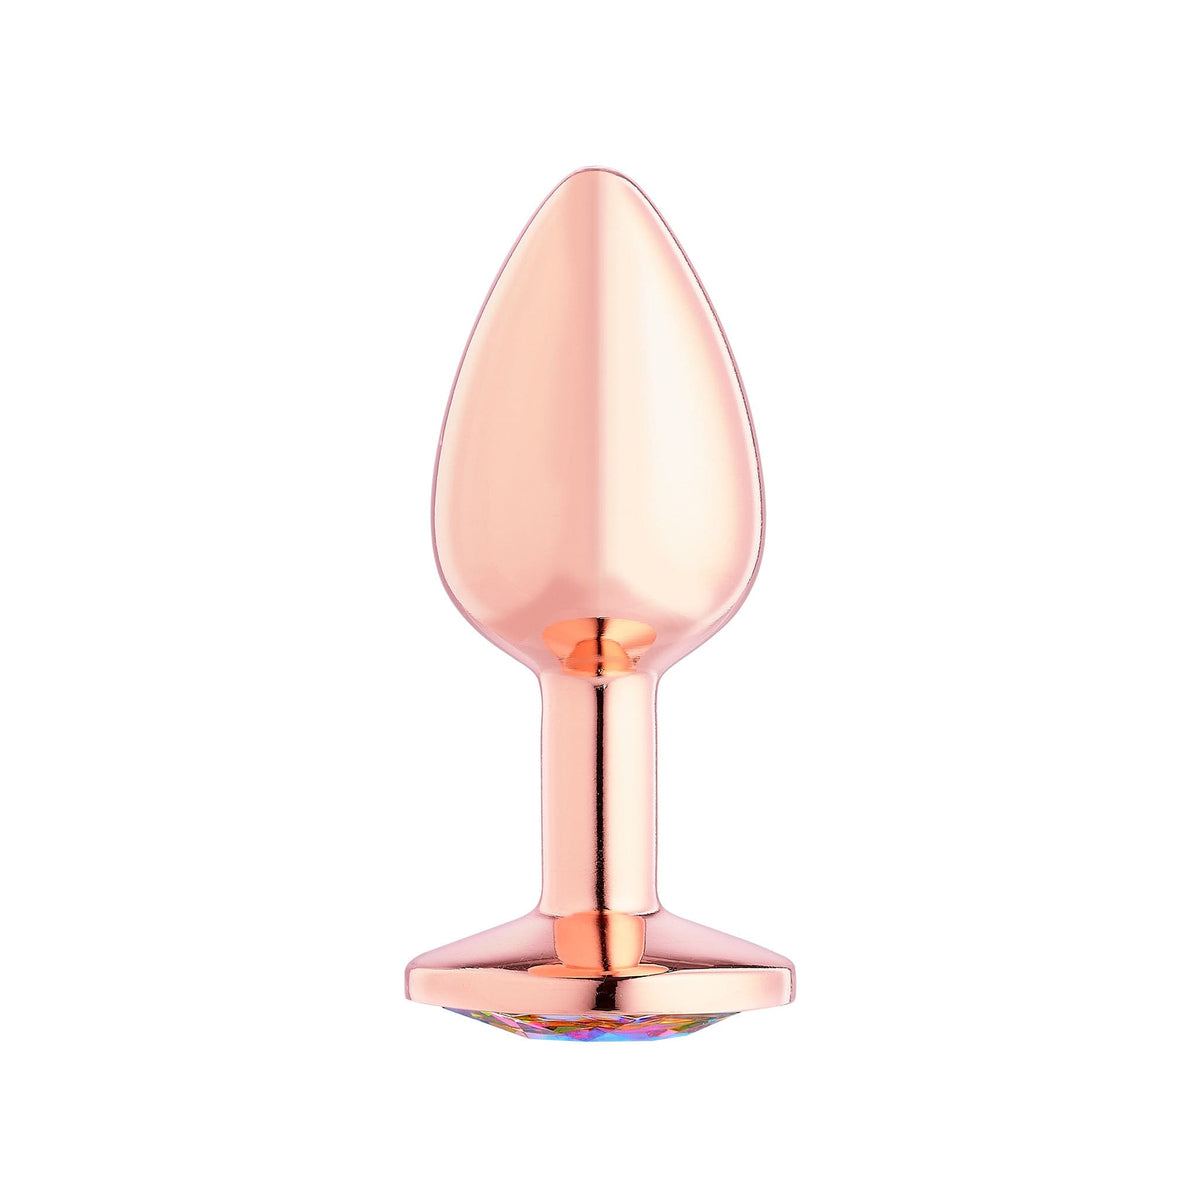 cloud 9 novelties gems rosy gold anal plug small